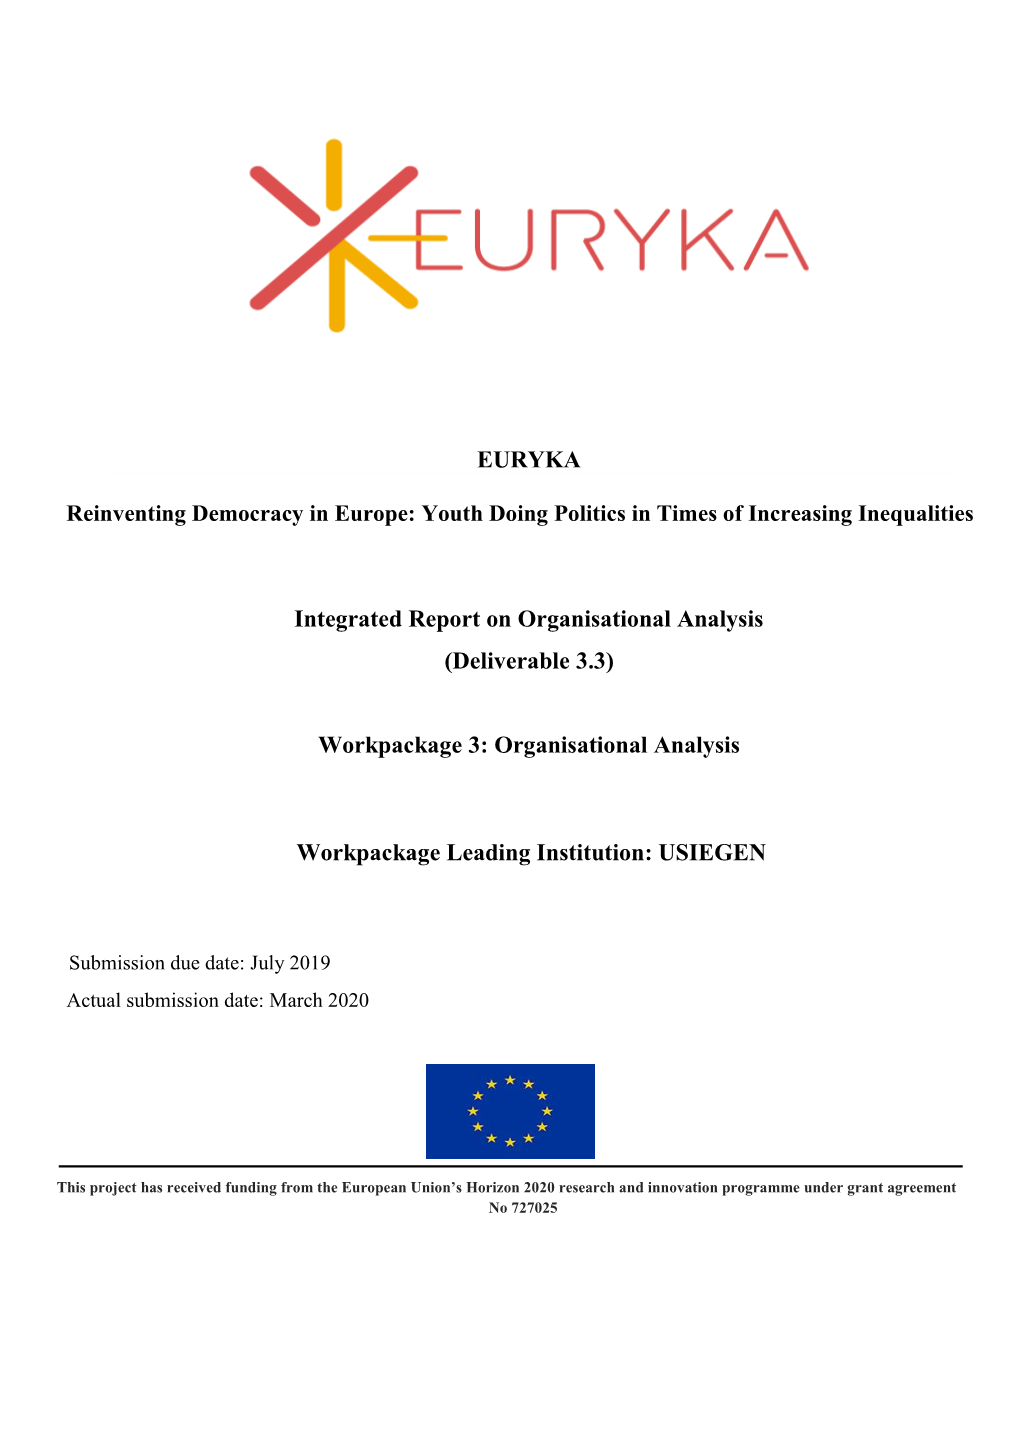 EURYKA Integrated Report on Organisational Analysis